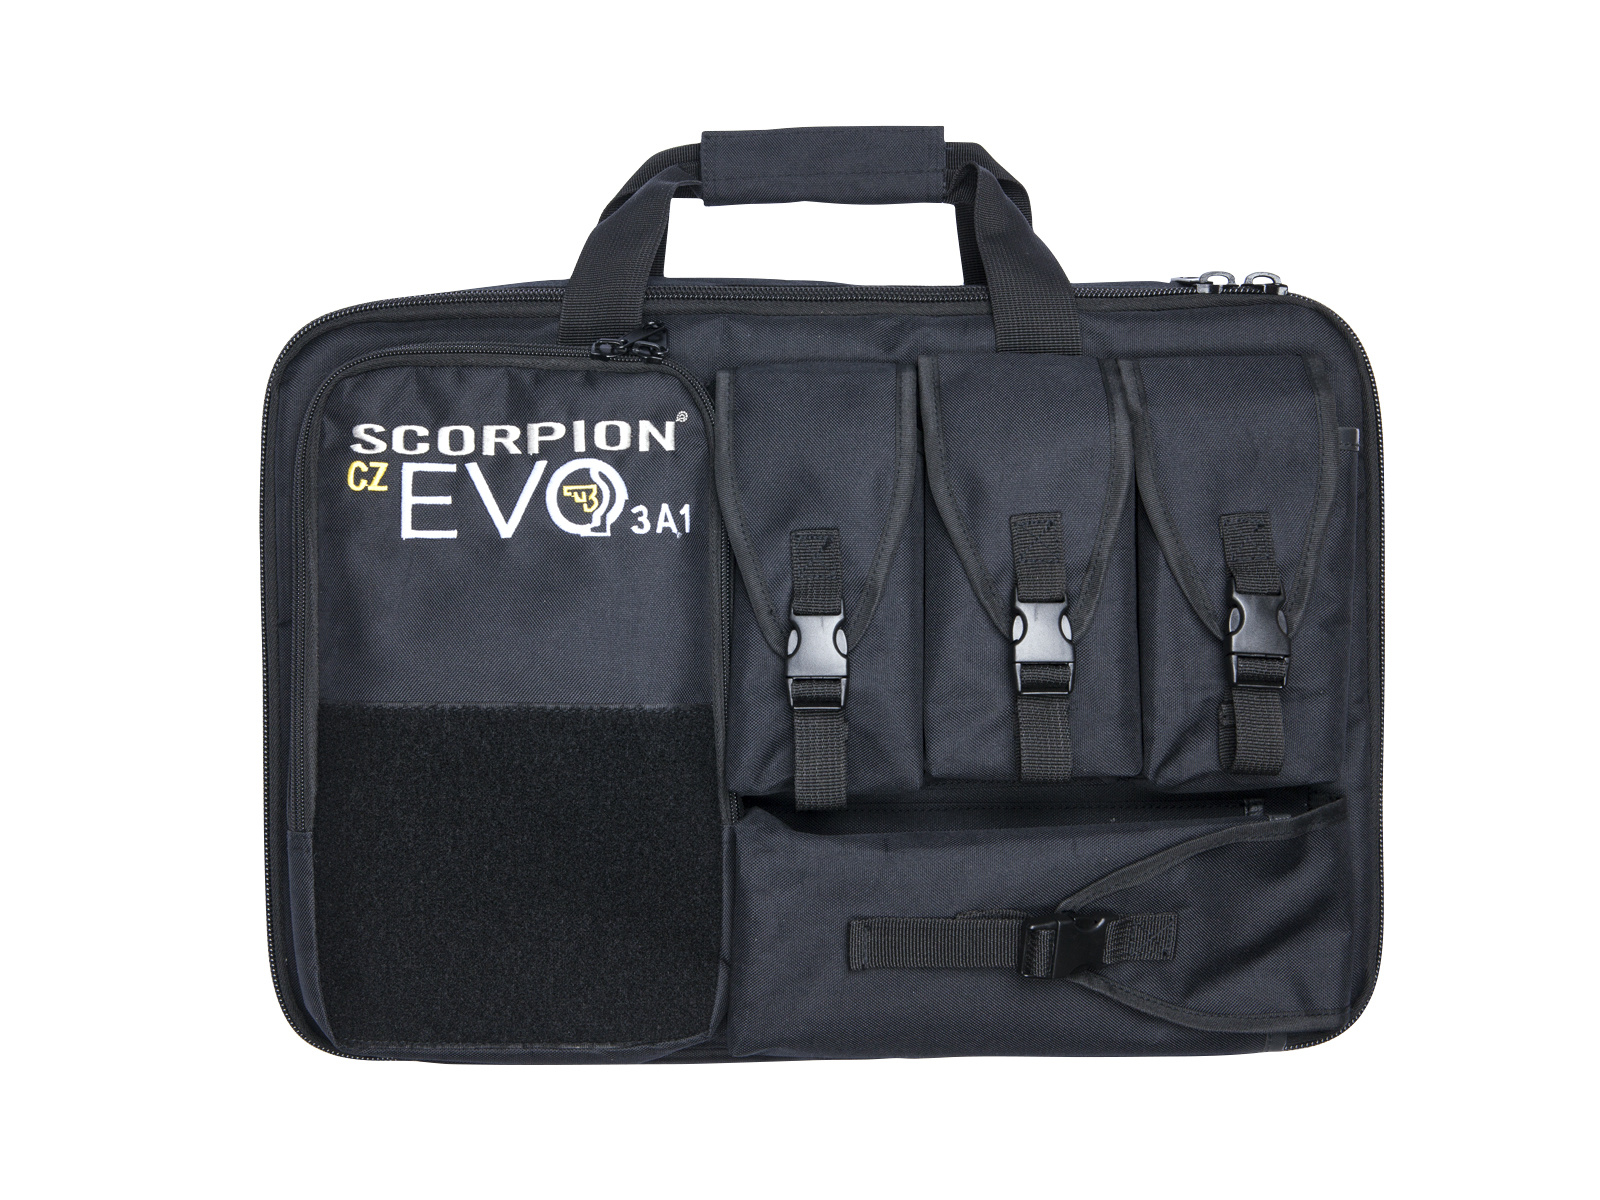 ASG Borsa per fucile Scorpion Bag EVO 3 A1 - BK